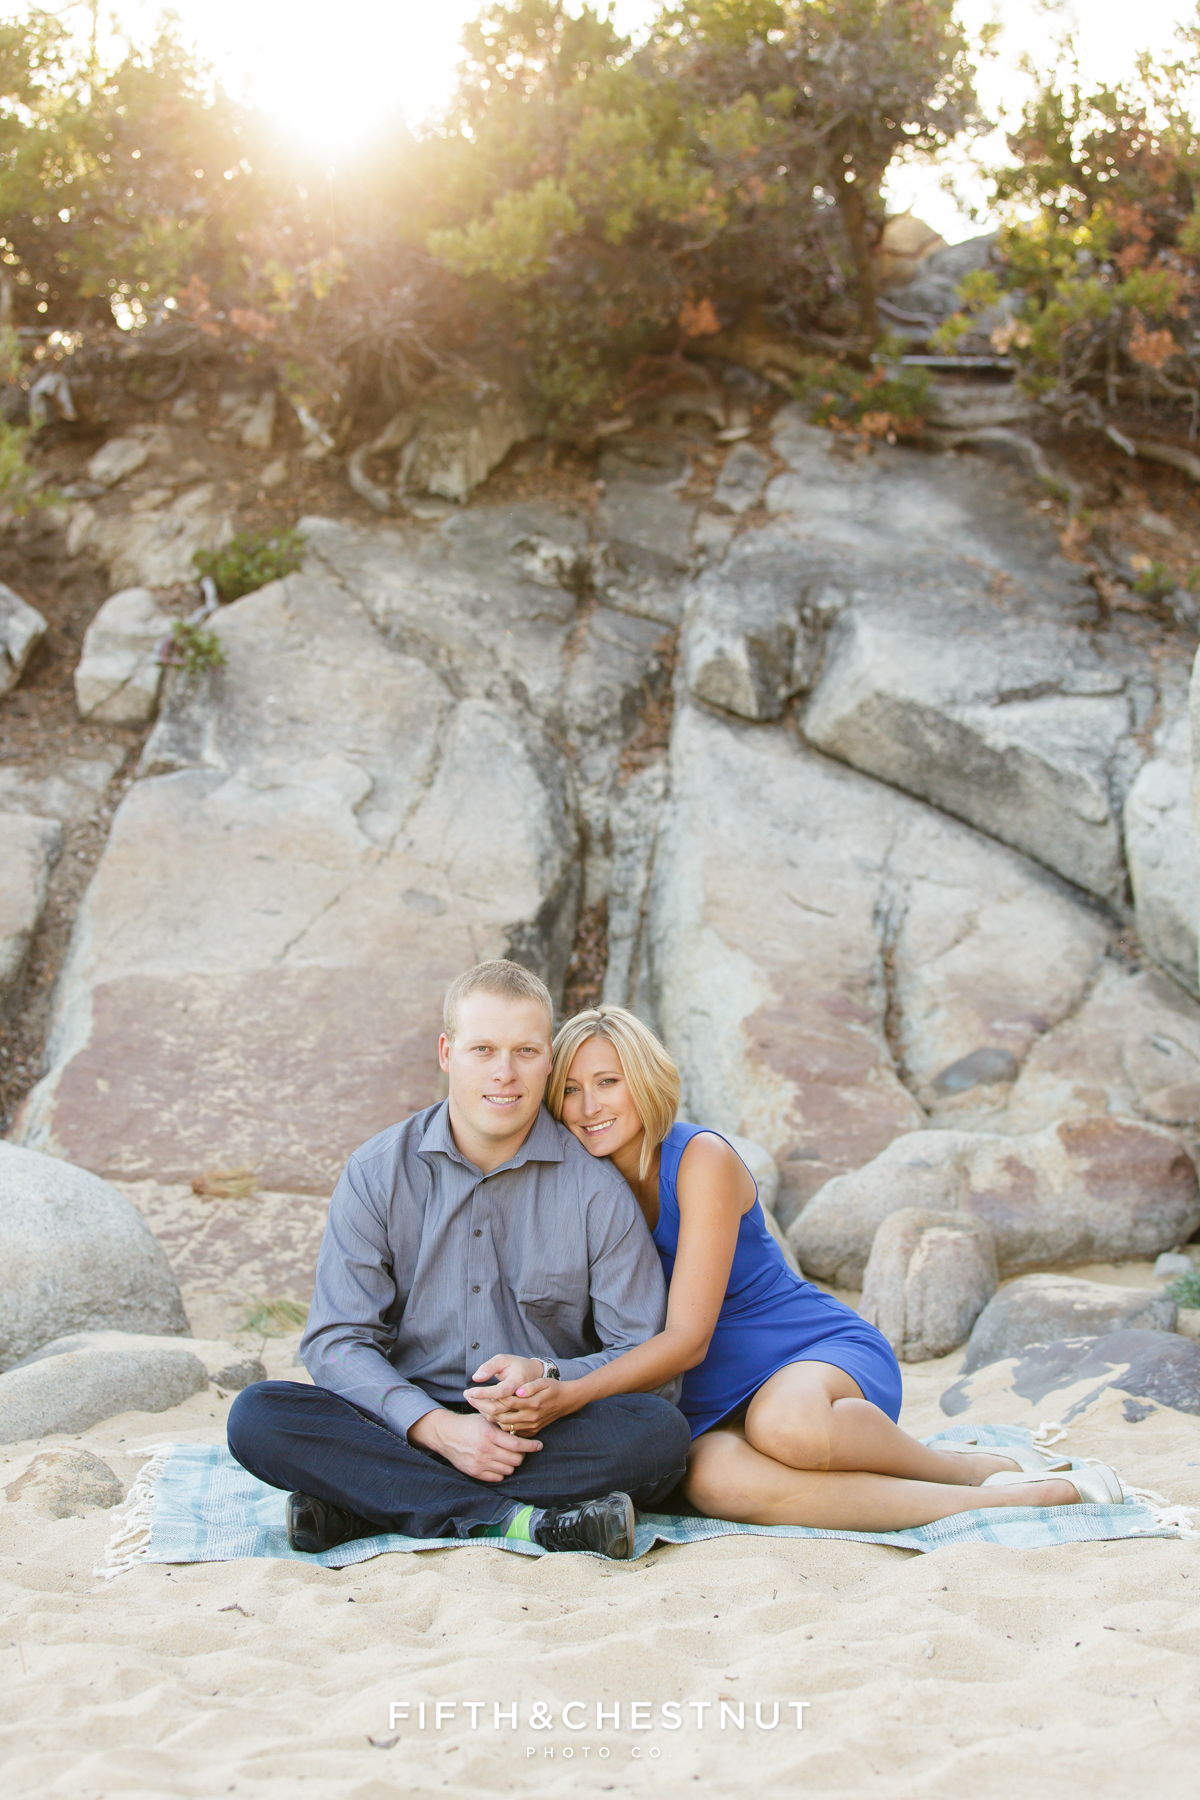 Speedboat Beach Portraits of romantic engagement in Lake Tahoe by Lake Tahoe Wedding Photographer